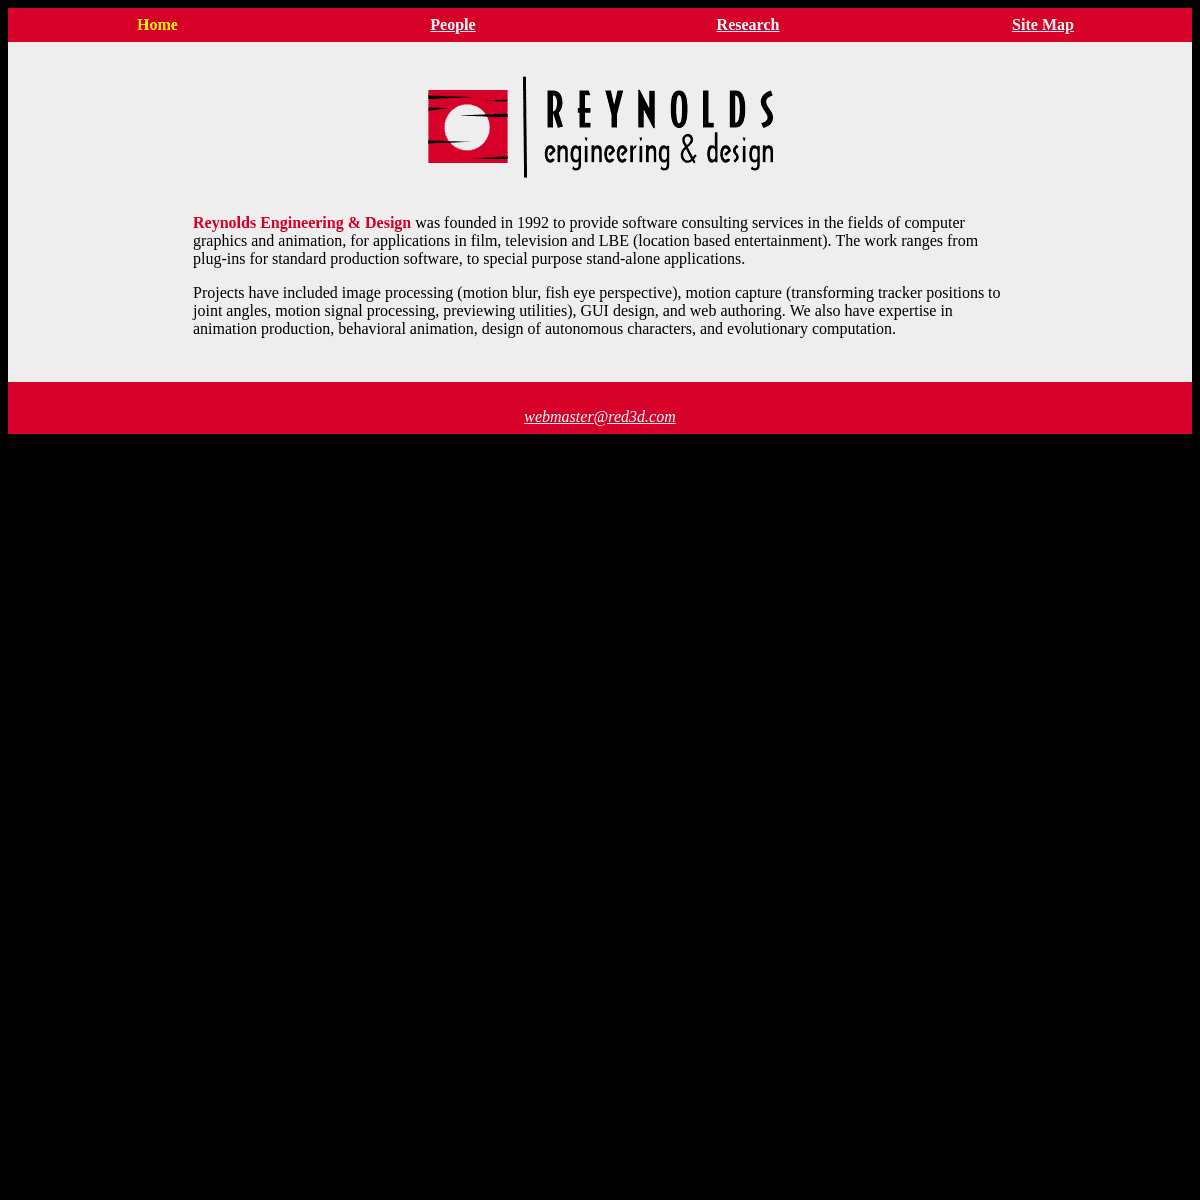 Reynolds Engineering & Design